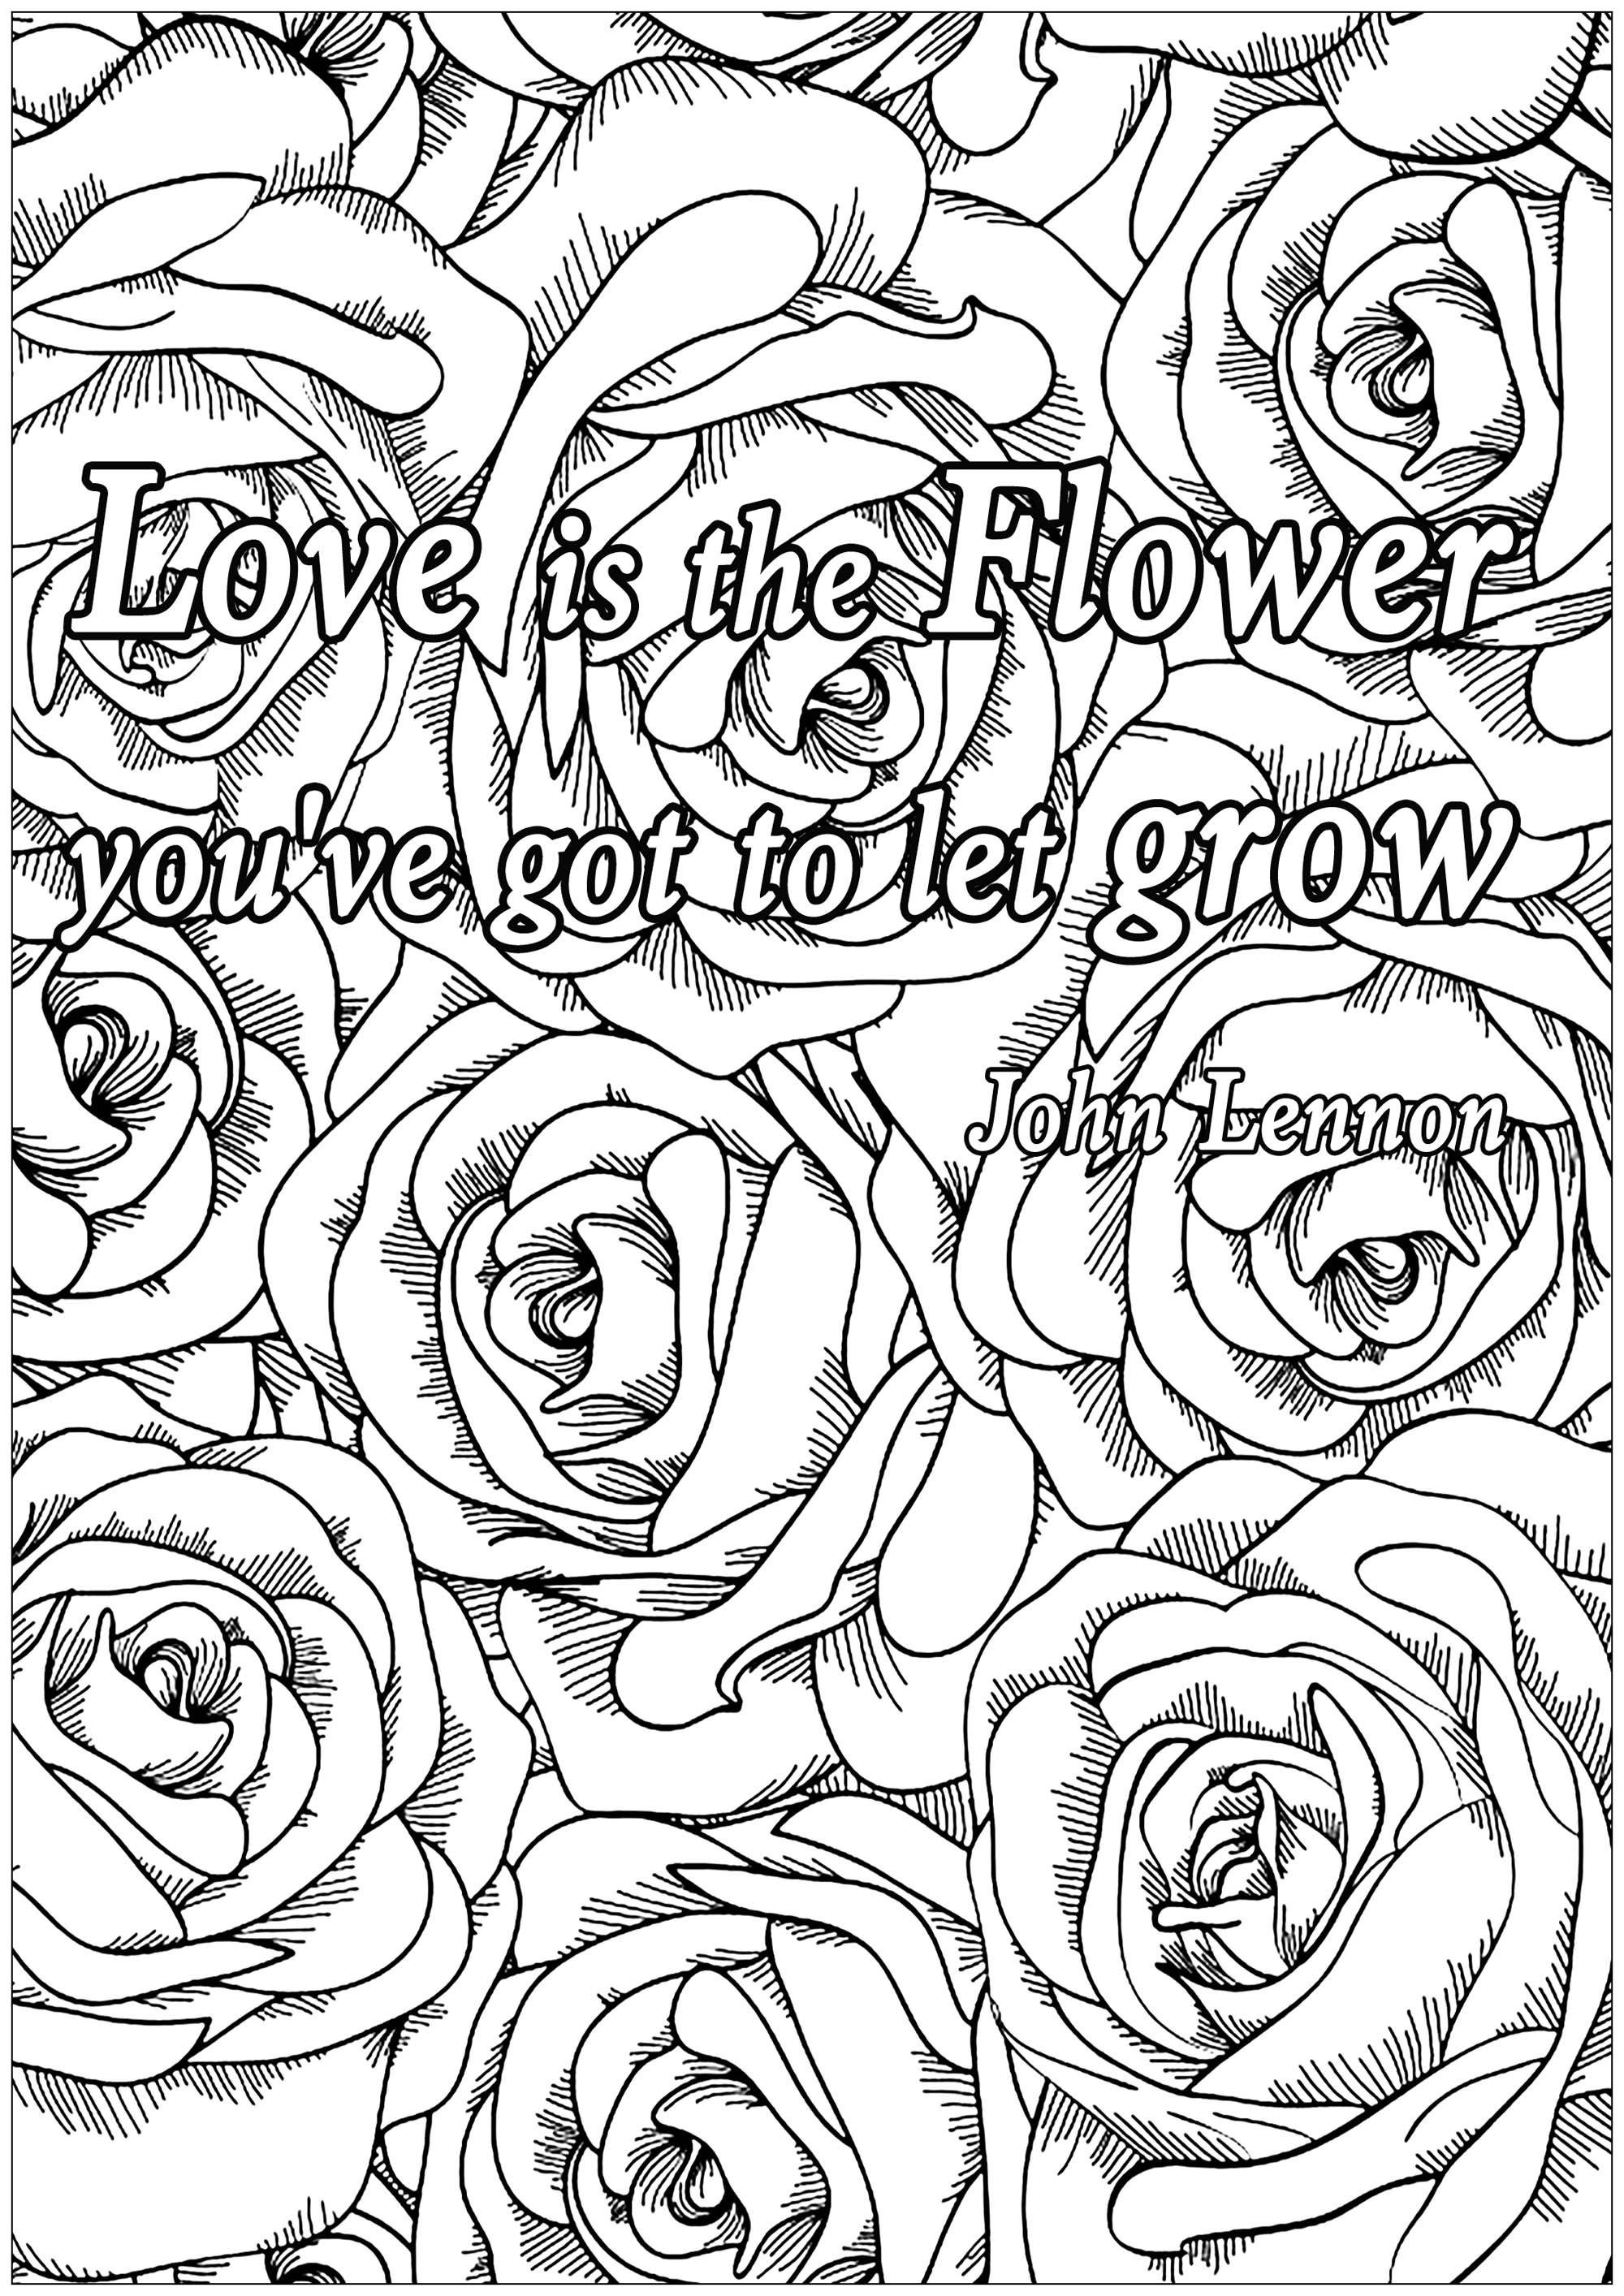 Love is the Flower you've got to let grow, John Lennon (con fondo lleno de rosas)